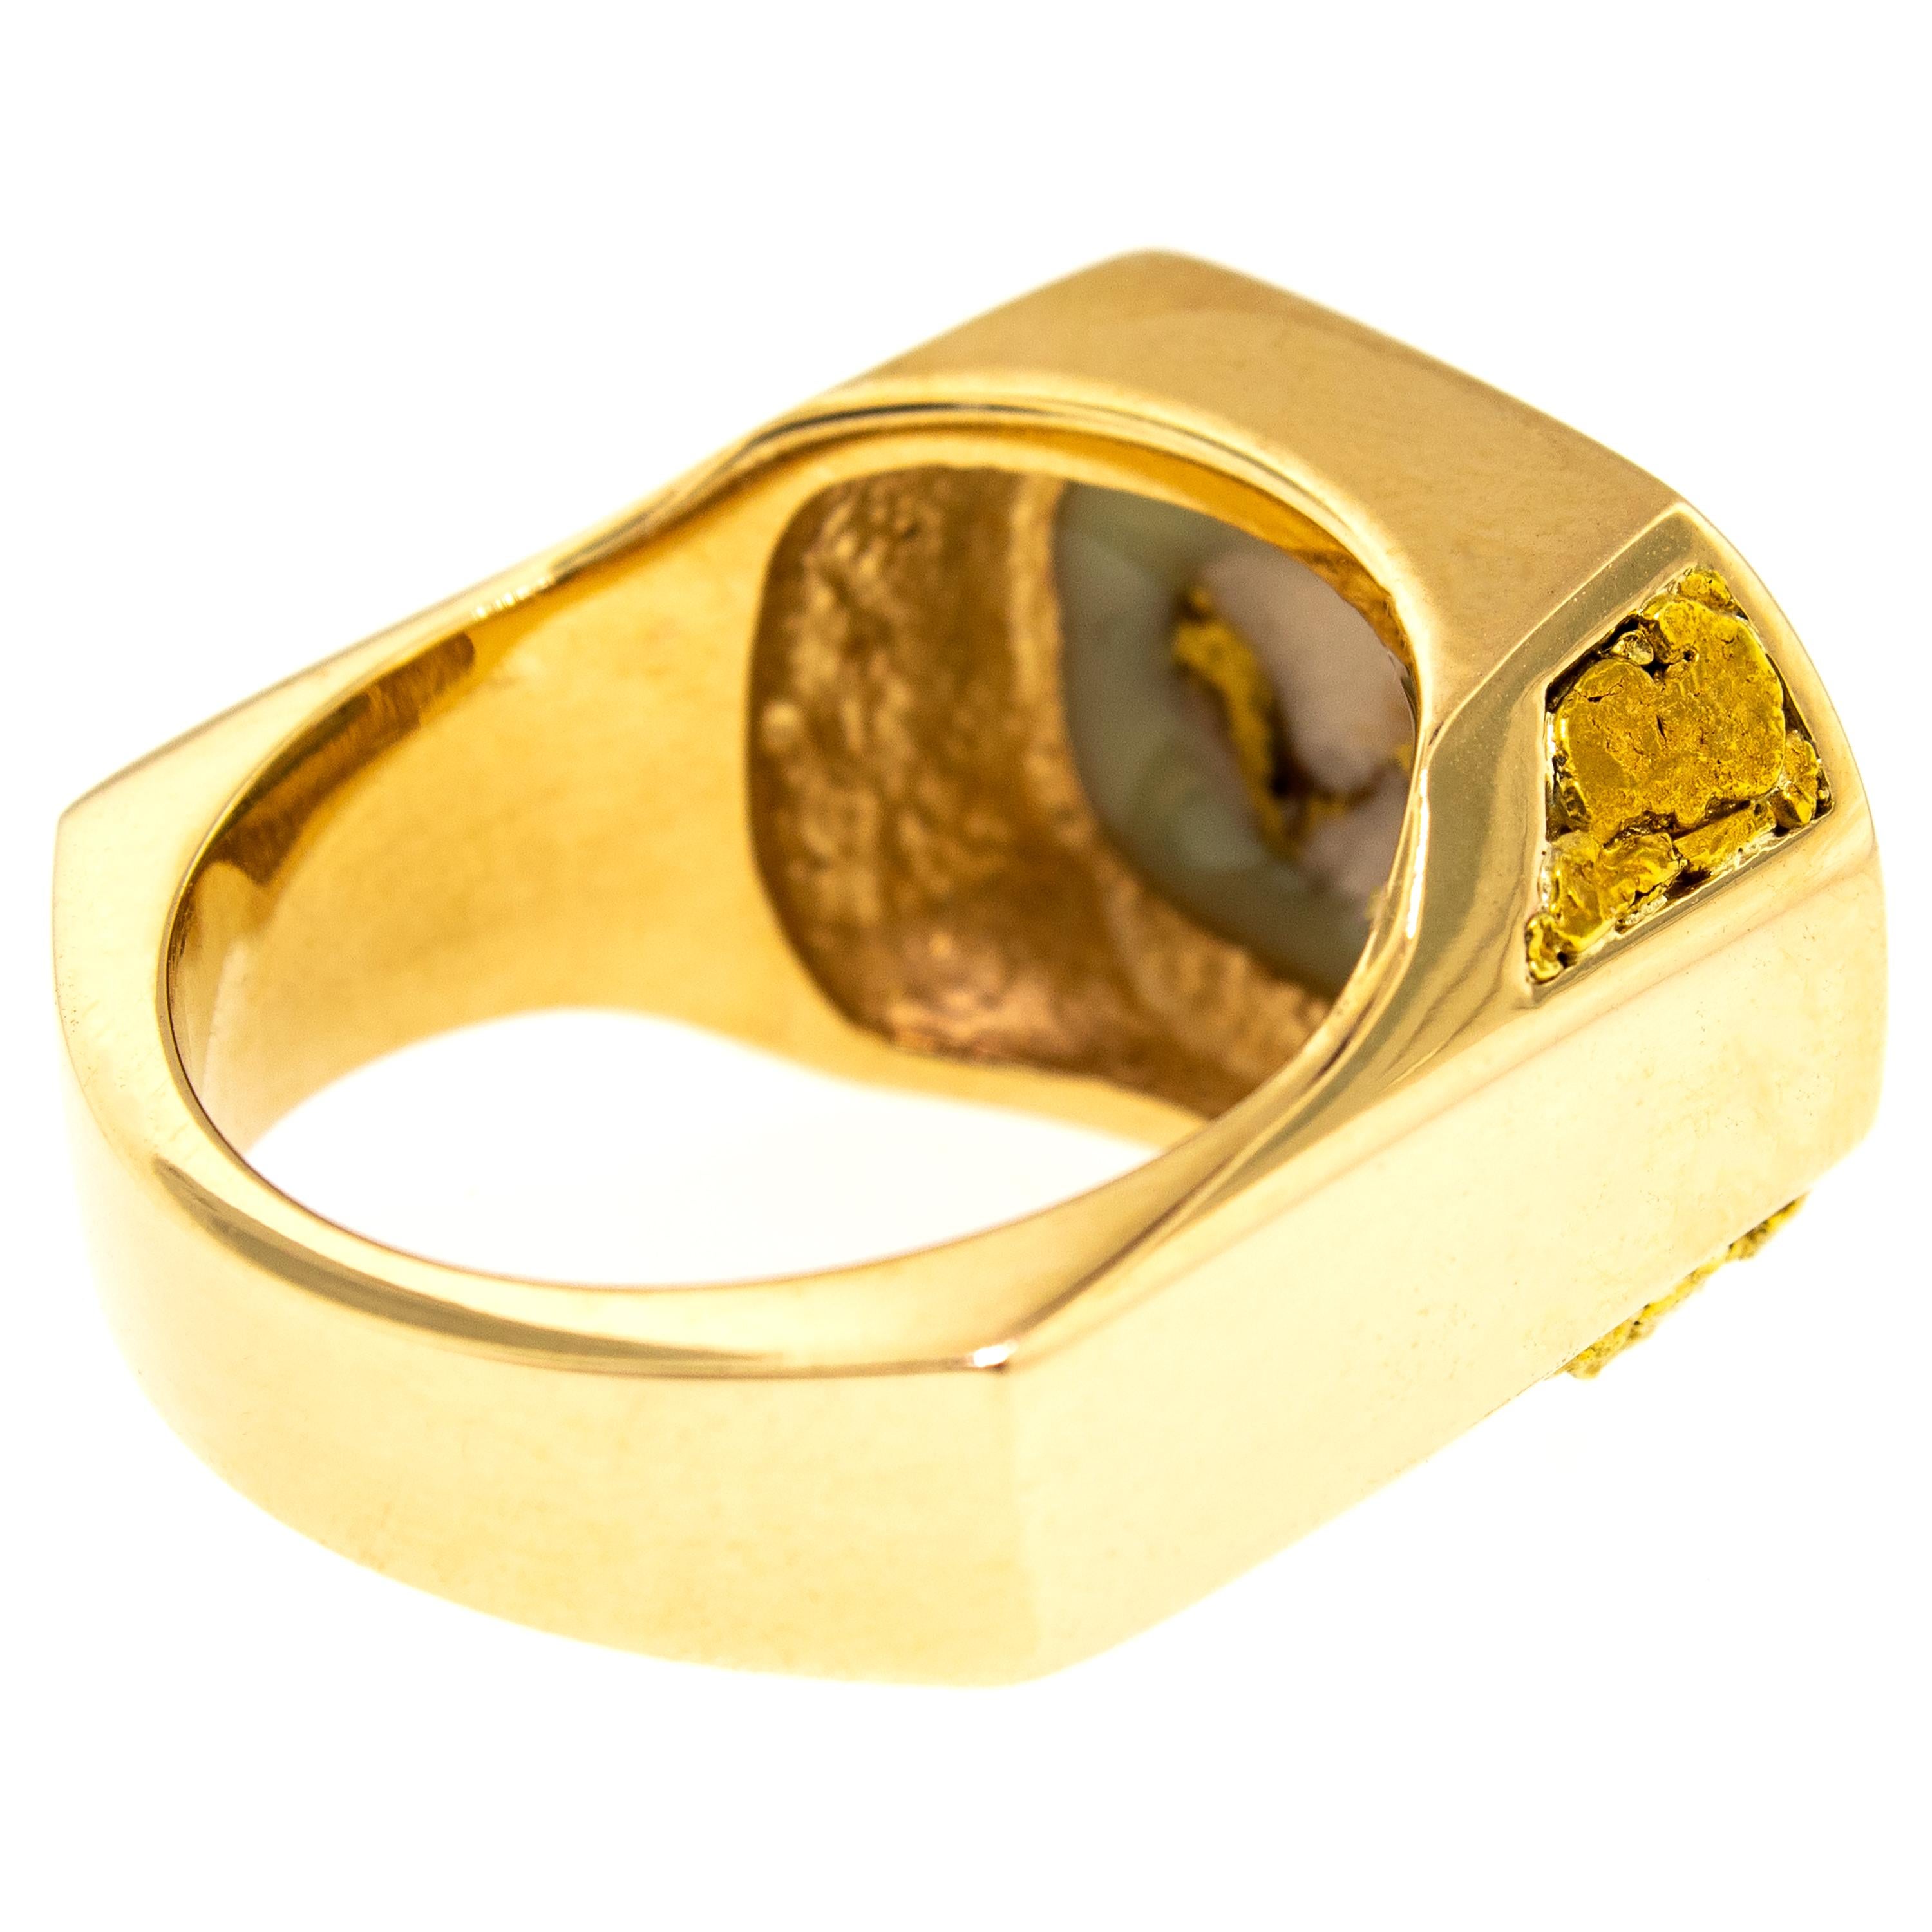 gold bearing quartz ring